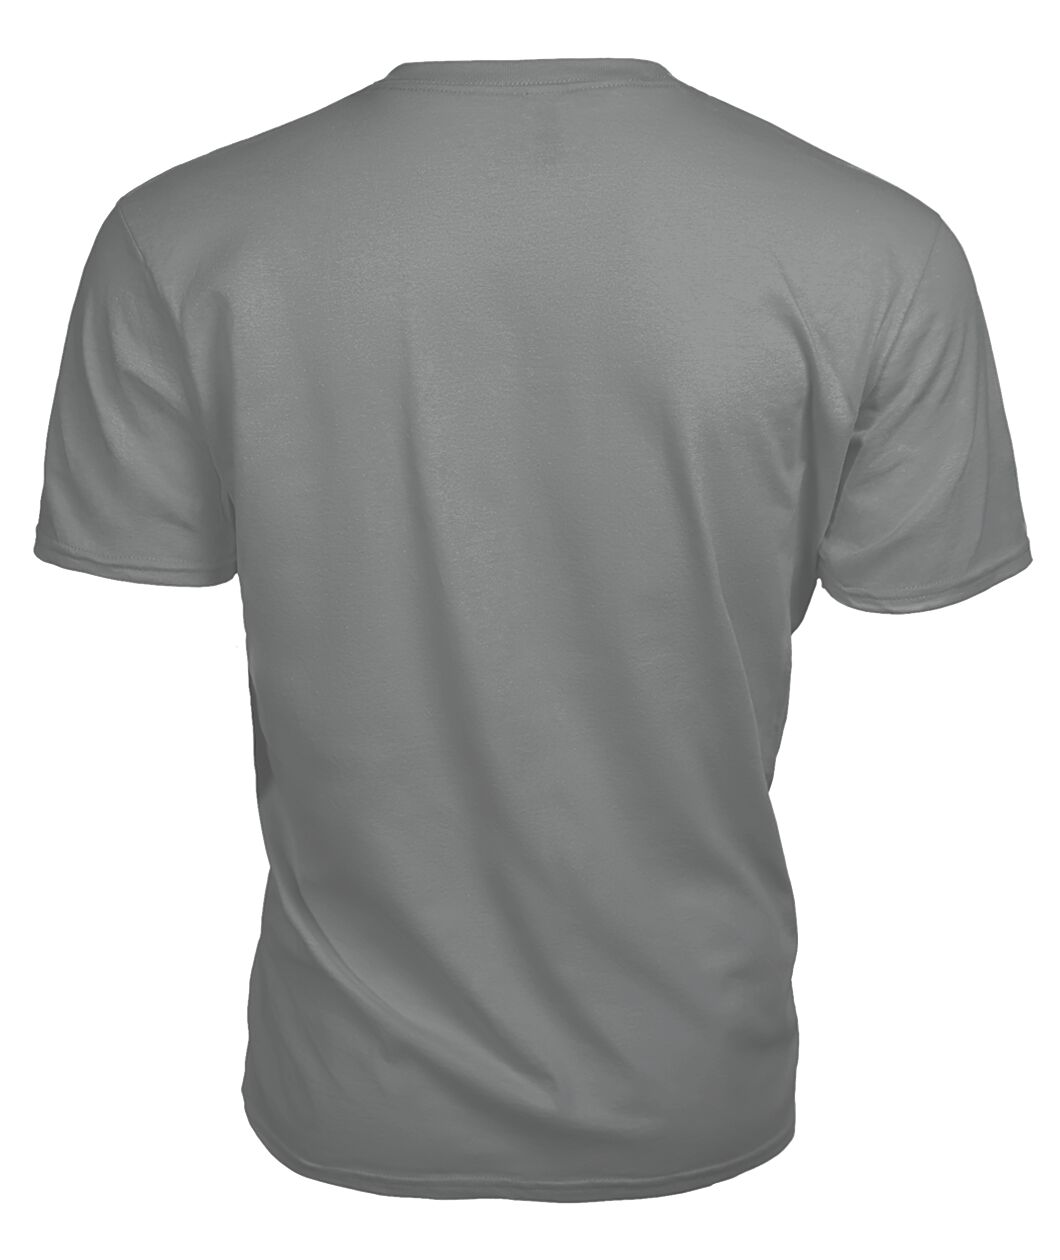 Munro Family Tartan - 2D T-shirt